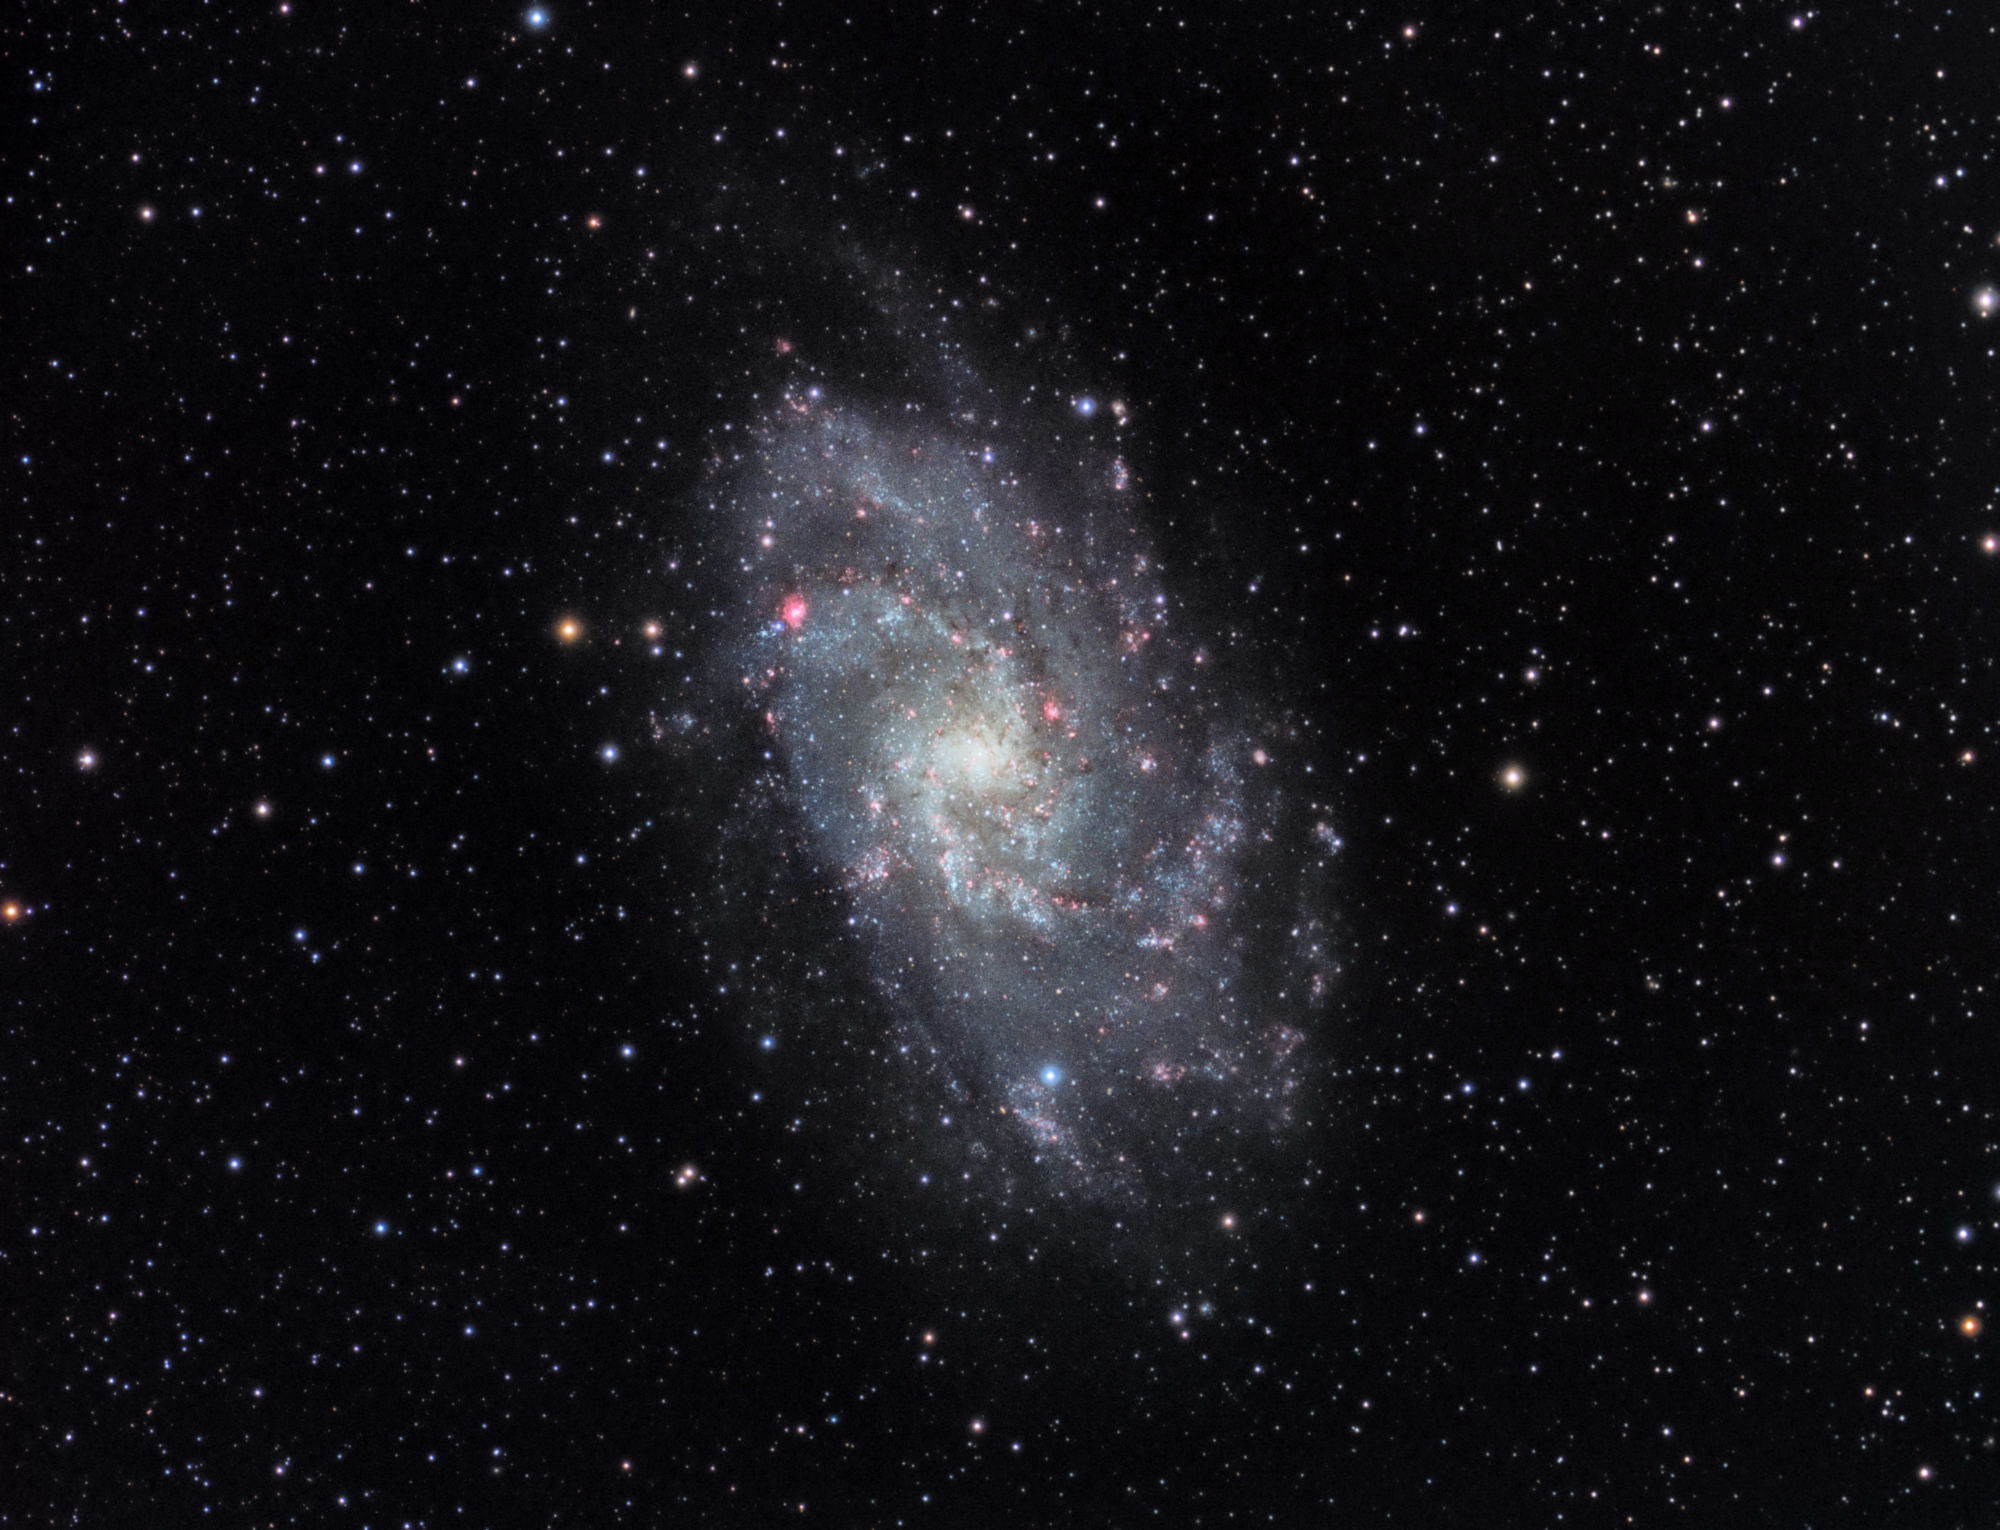 Triangulum galaxy - M33